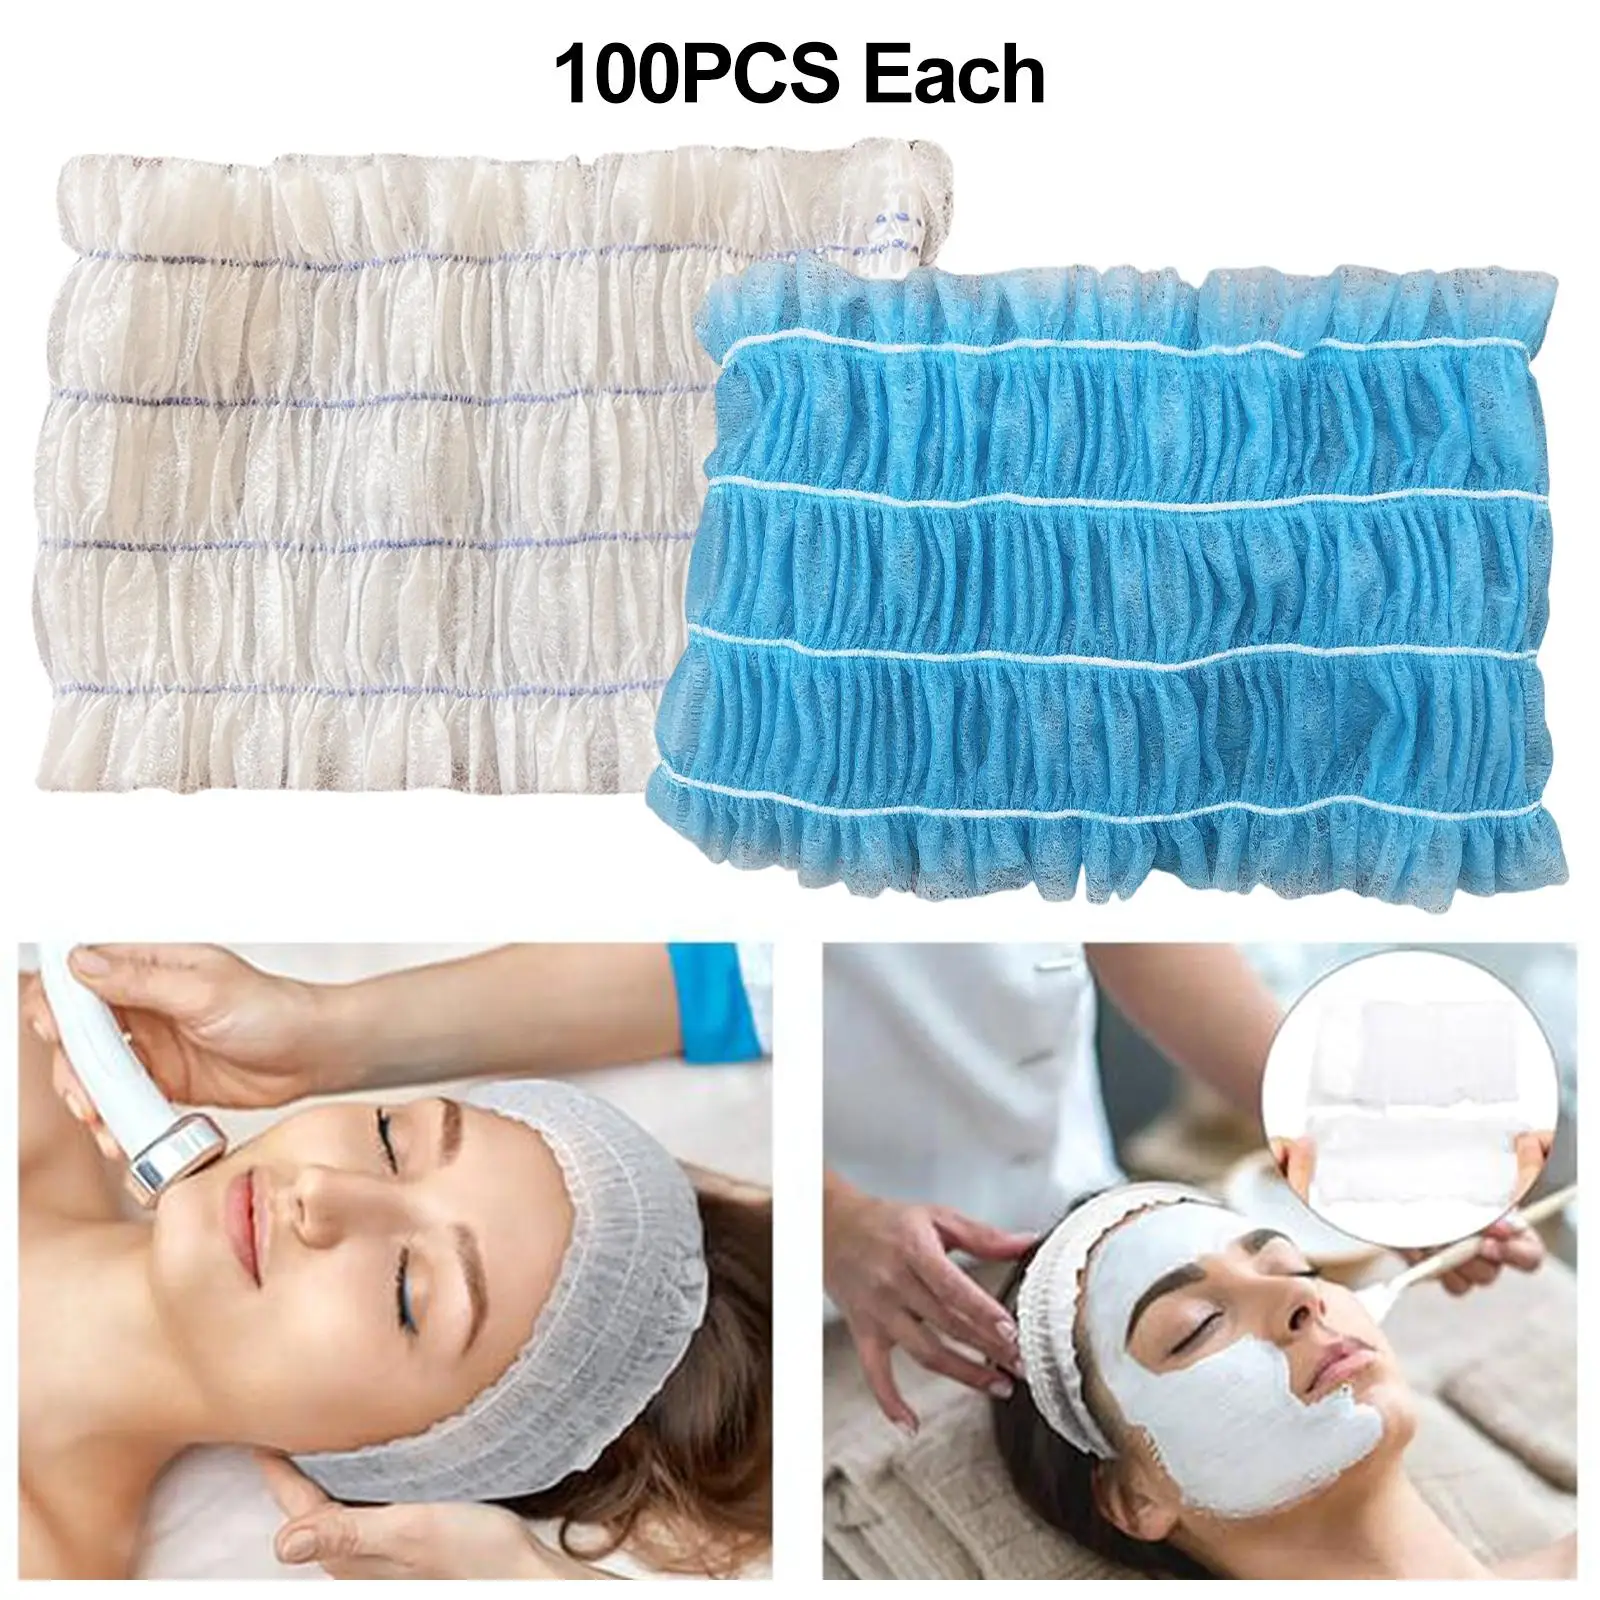 100Pcs Disposable SPA Headbands Women Girls Breathable Non Woven Soft Skin Care Hair Band for Salon Skin Care Sauna Tanning